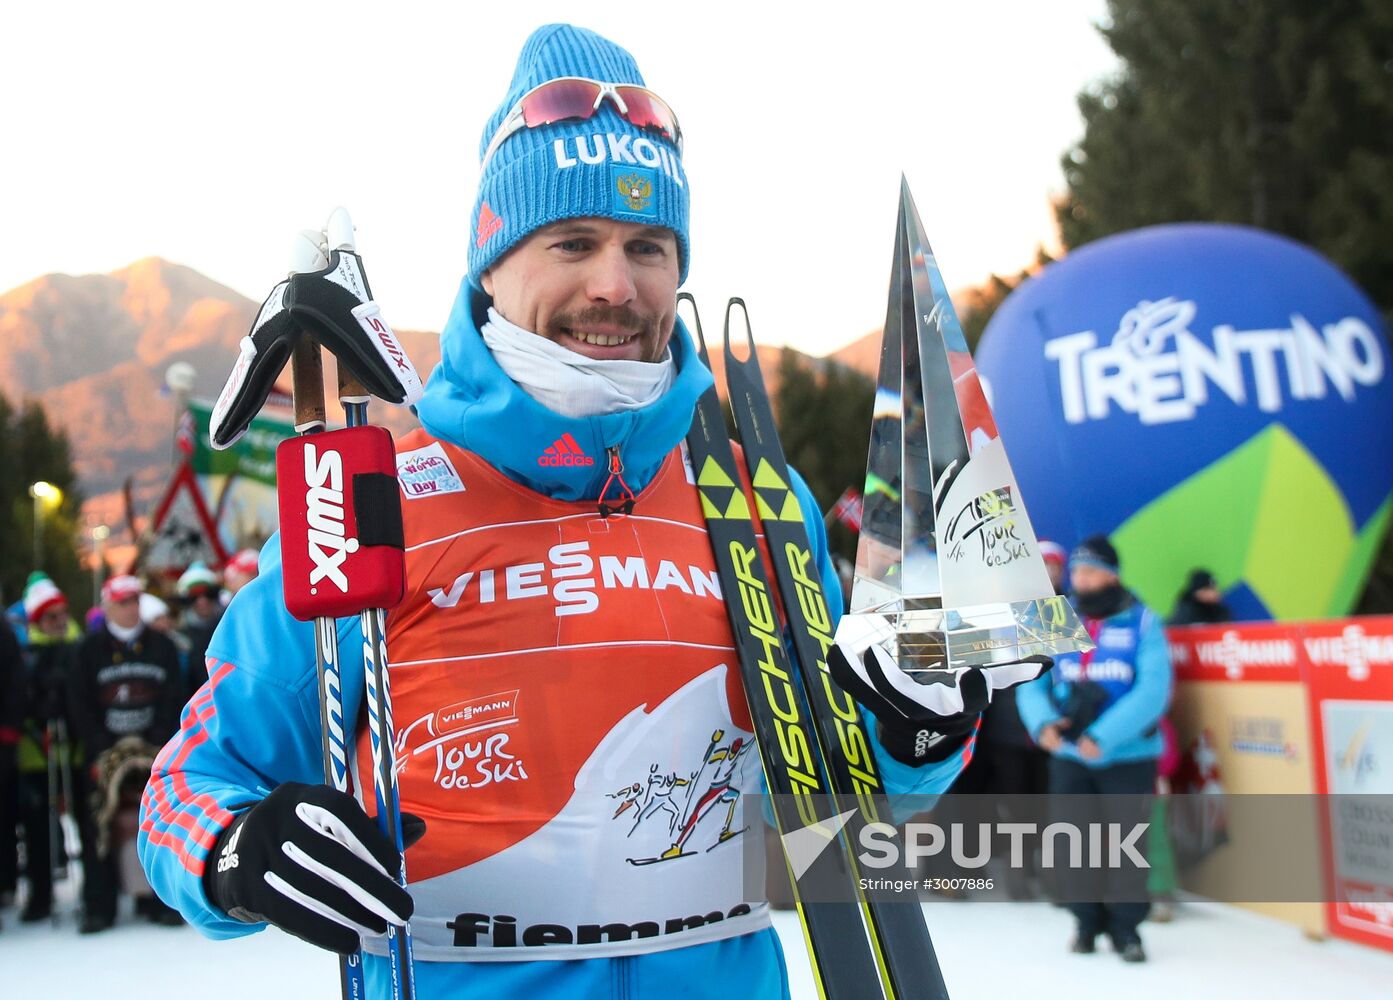 Sergei Ustyugov wins multi-stage Tour de Ski race